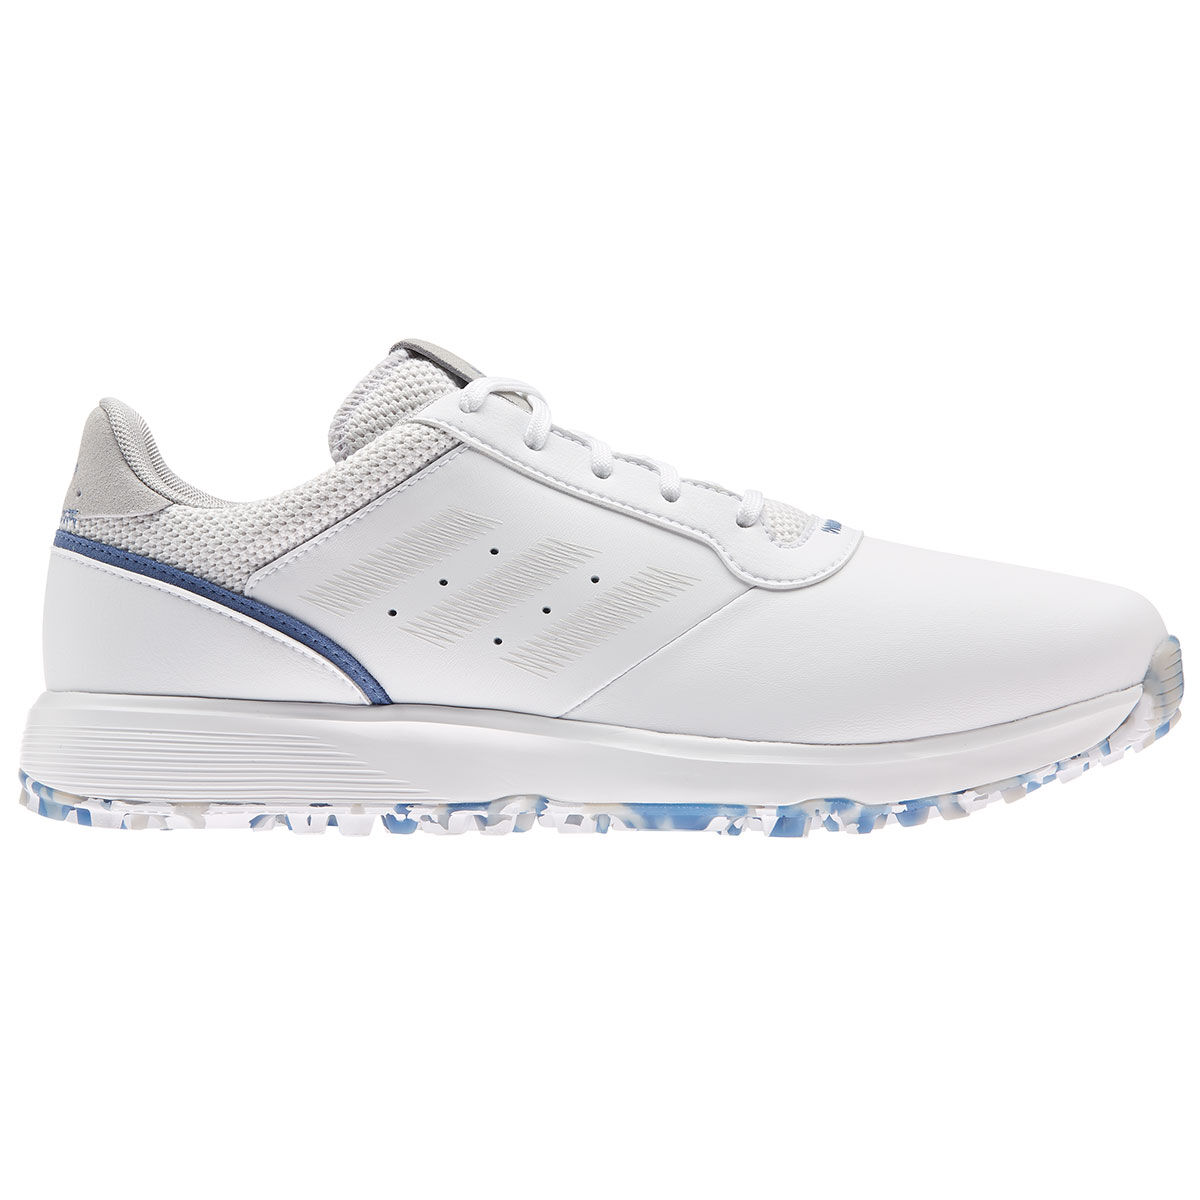 Chaussures adidas Golf S2G cuir, homme, 7, White/grey/blue | Online Golf